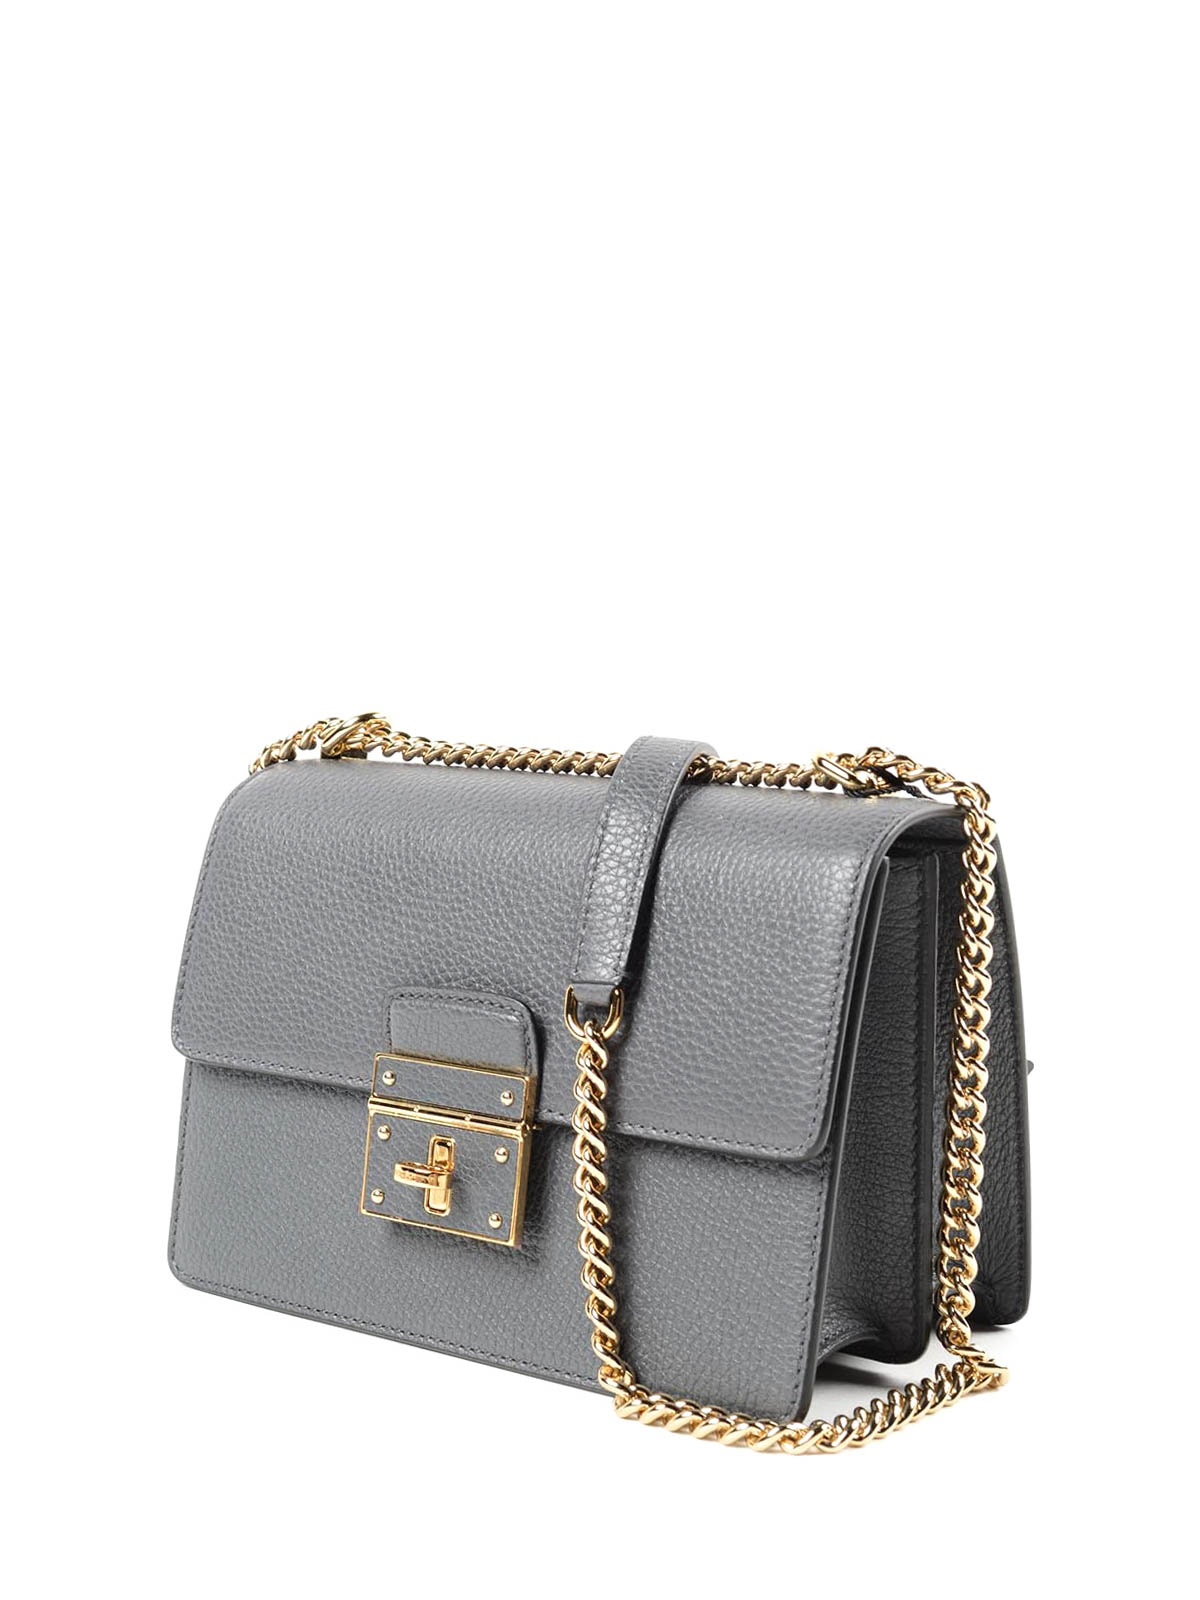 Dolce \u0026 Gabbana - Rosalia shoulder bag 